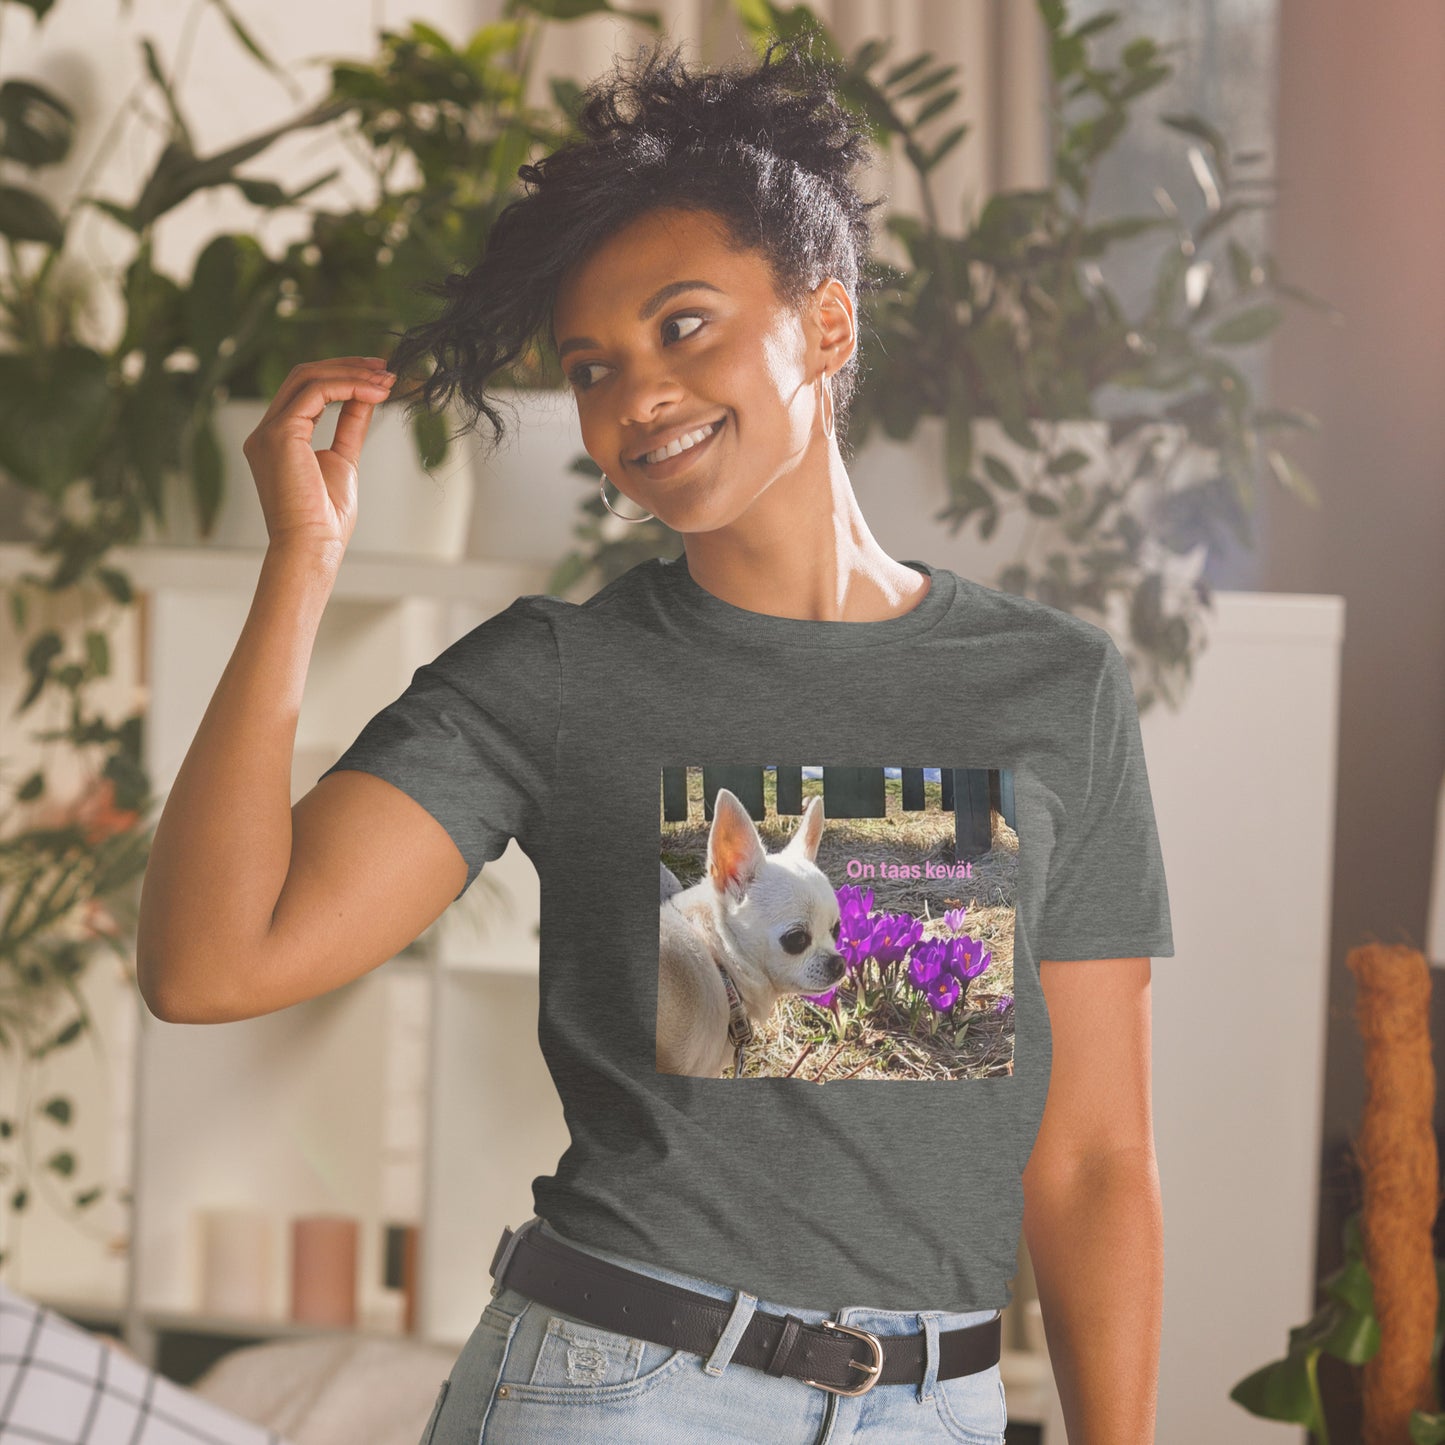 Unisex-T-Shirt „Frühling“ MIT TEXT